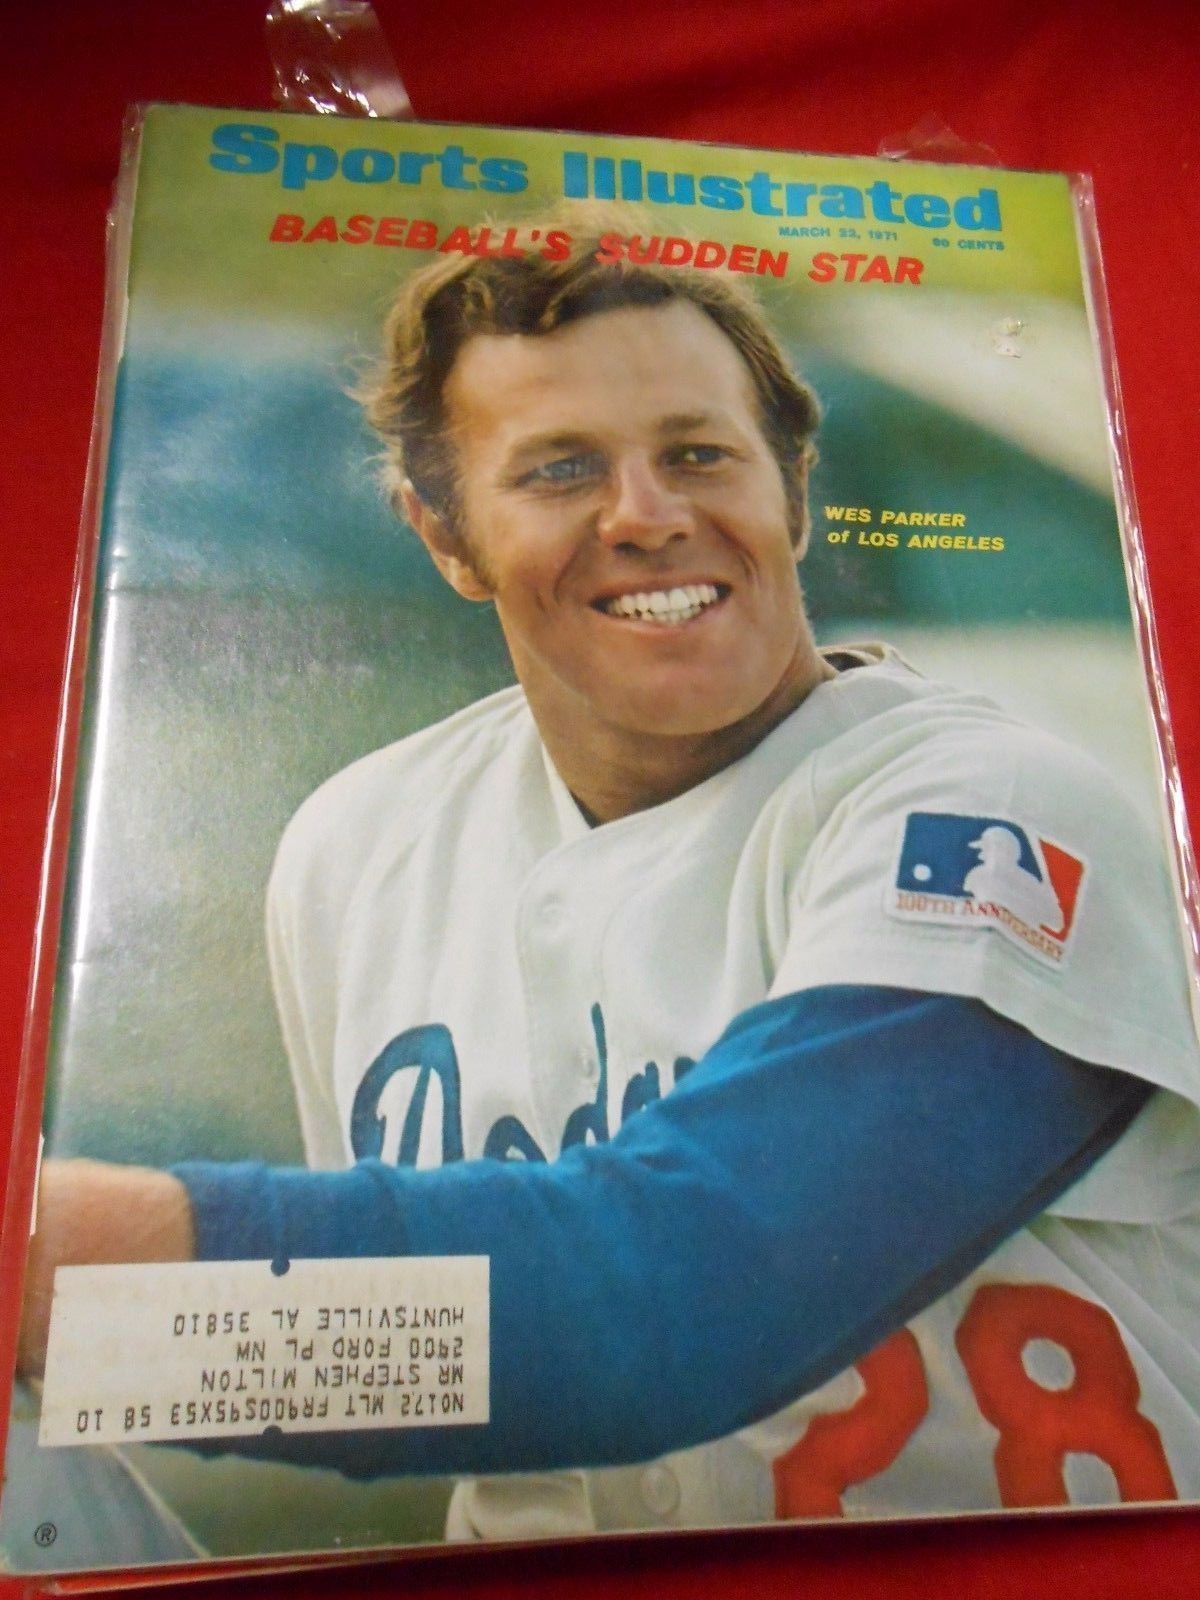 SPORTS ILLUSTRATED Mar 22,1971 BASEBALL'S SUDDEN STAR Wes Parker-LA Dodgers - $7.51